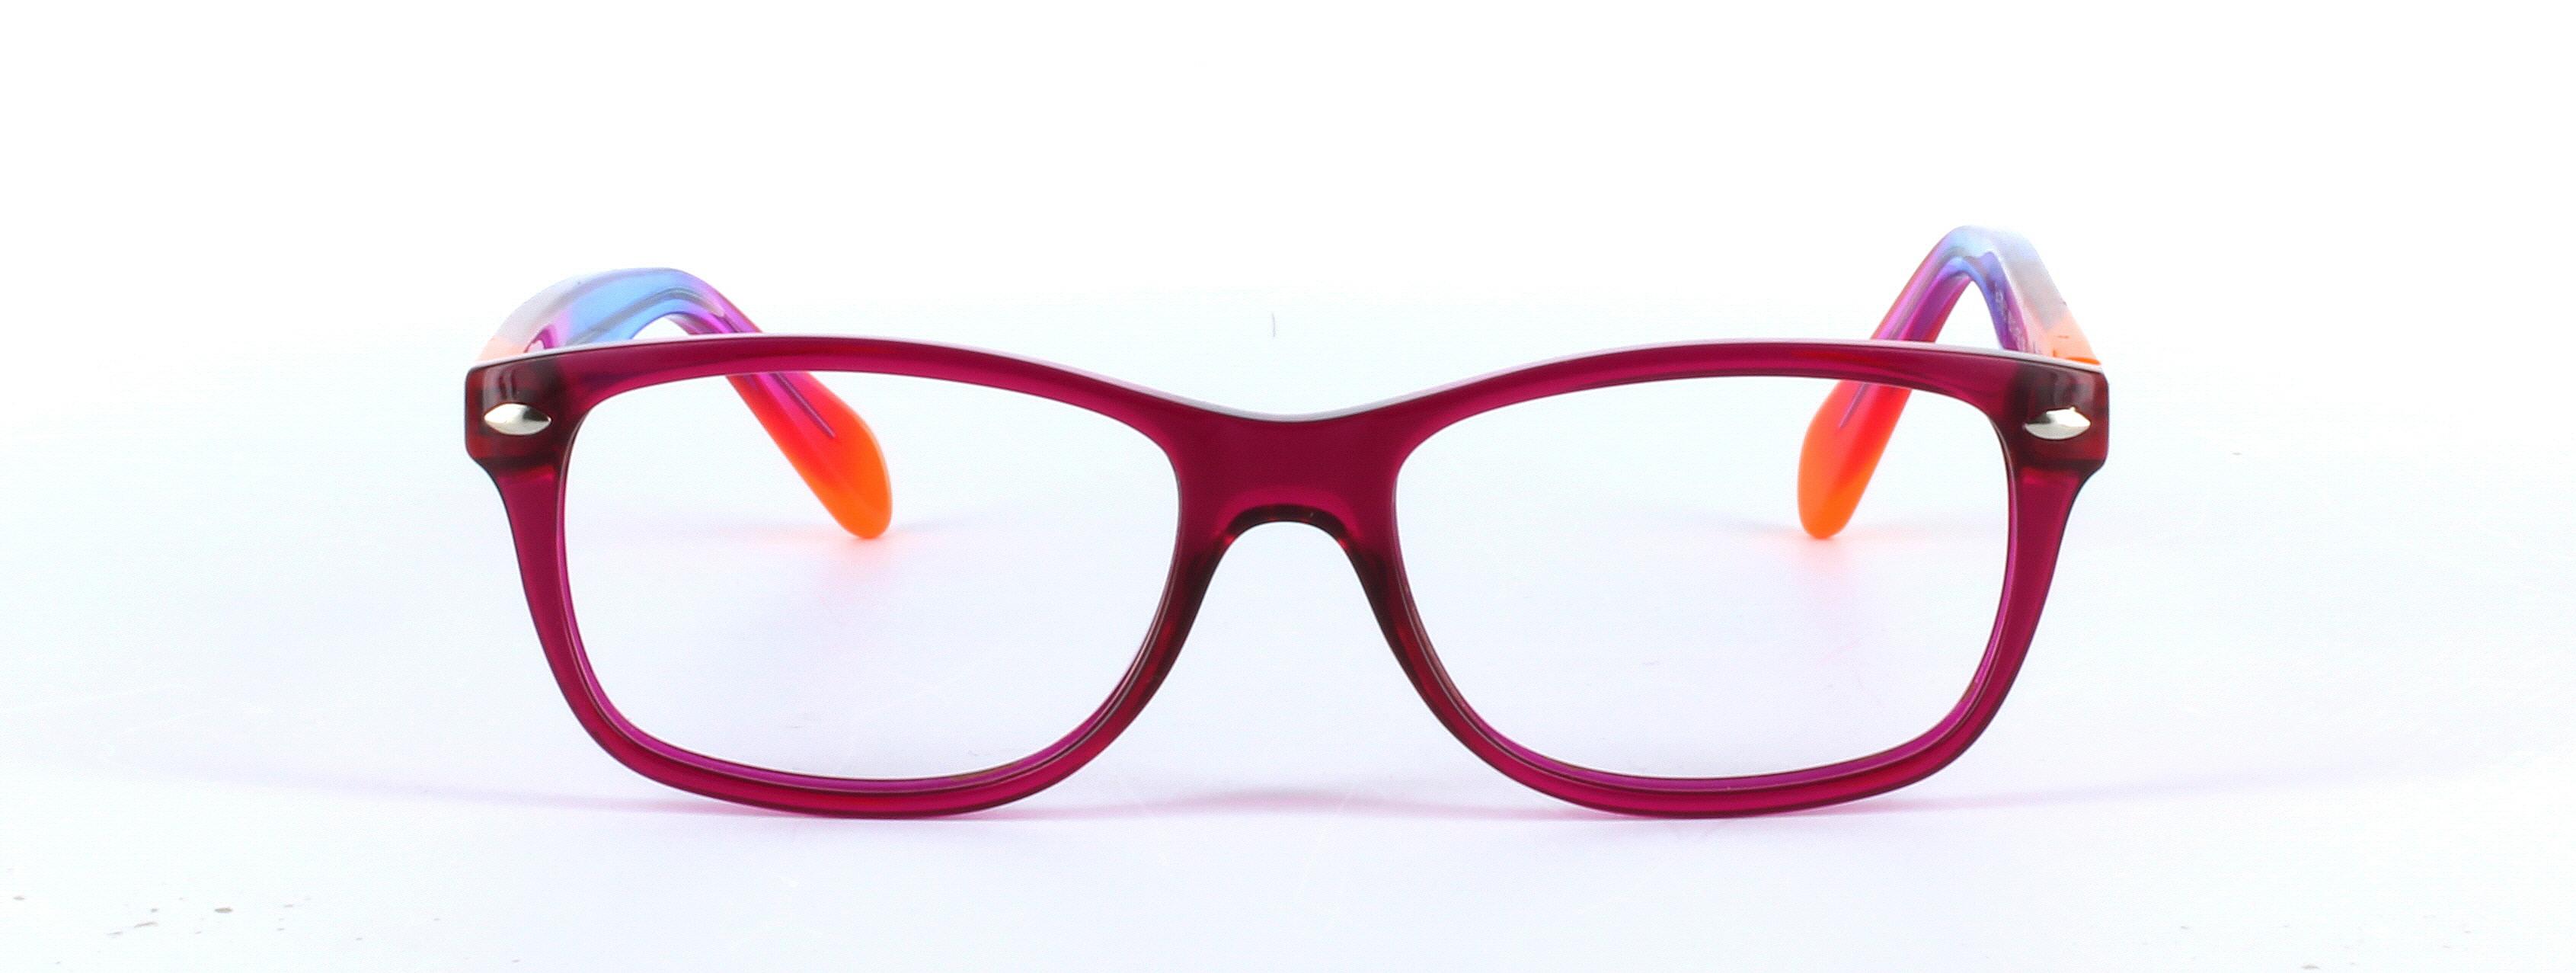 Olivia Purple Full Rim Oval Plastic Glasses - Image View 5